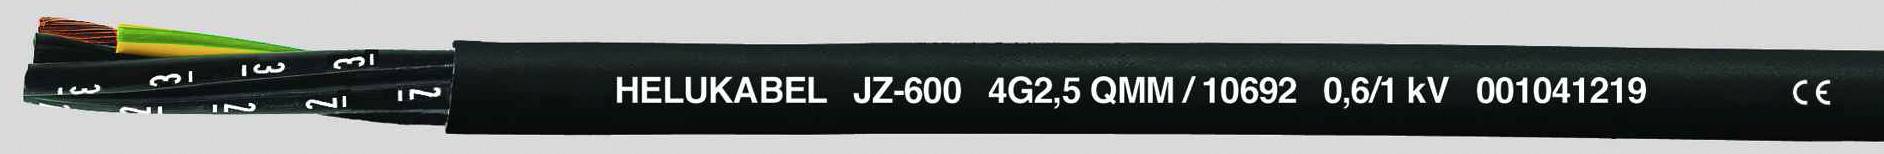 HELUKABEL JZ-600 Steuerleitung 7 G 0.75 mm² Schwarz 10591-500 500 m